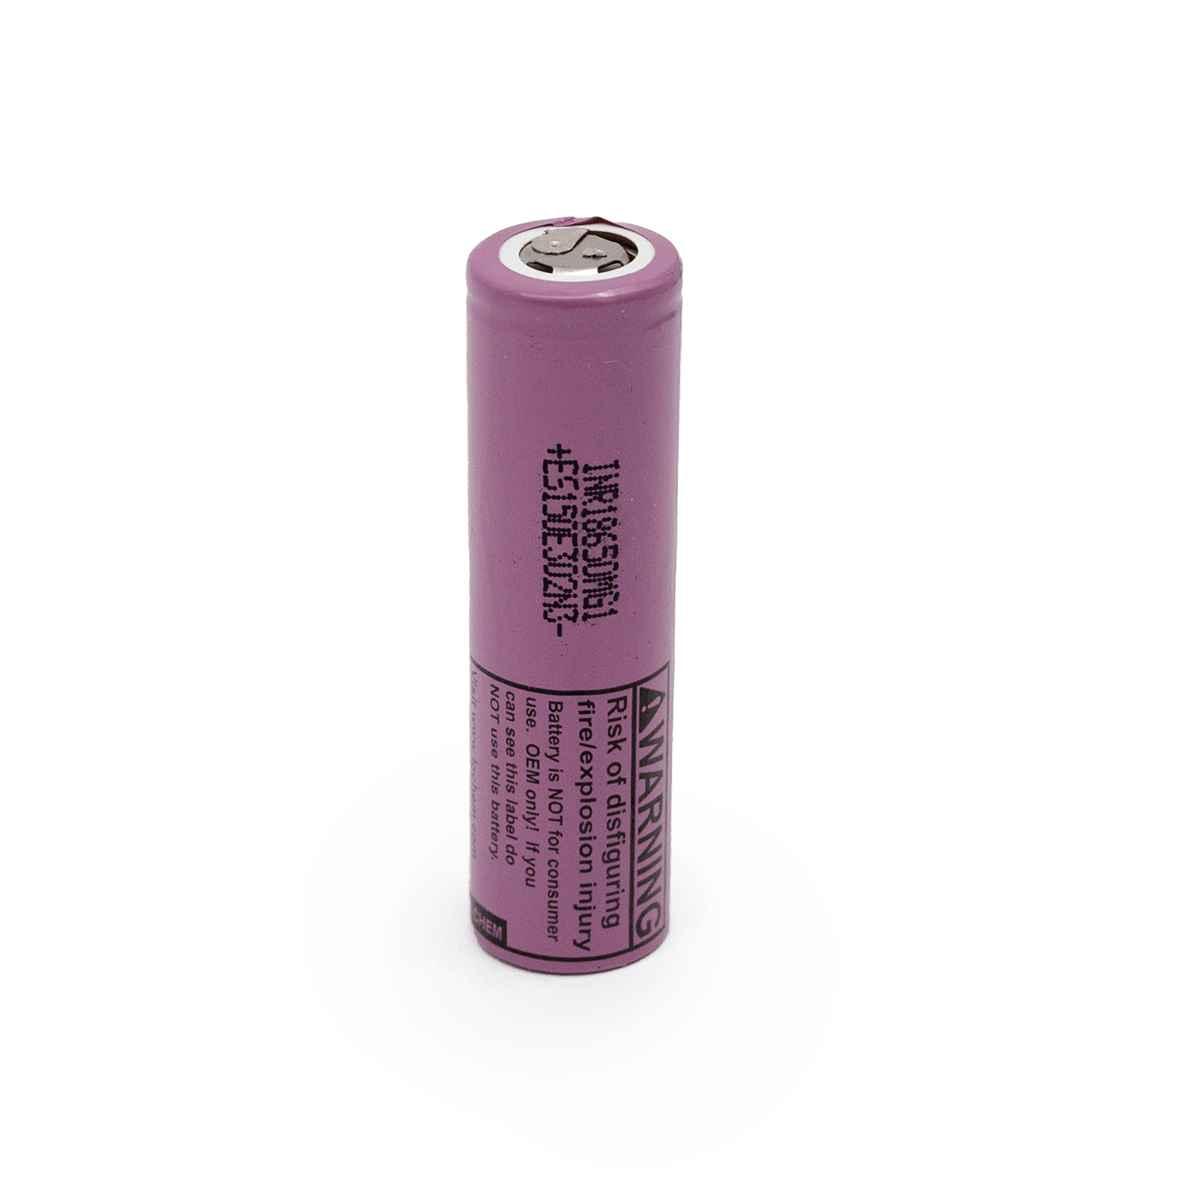 LG MGI 18650 batteri